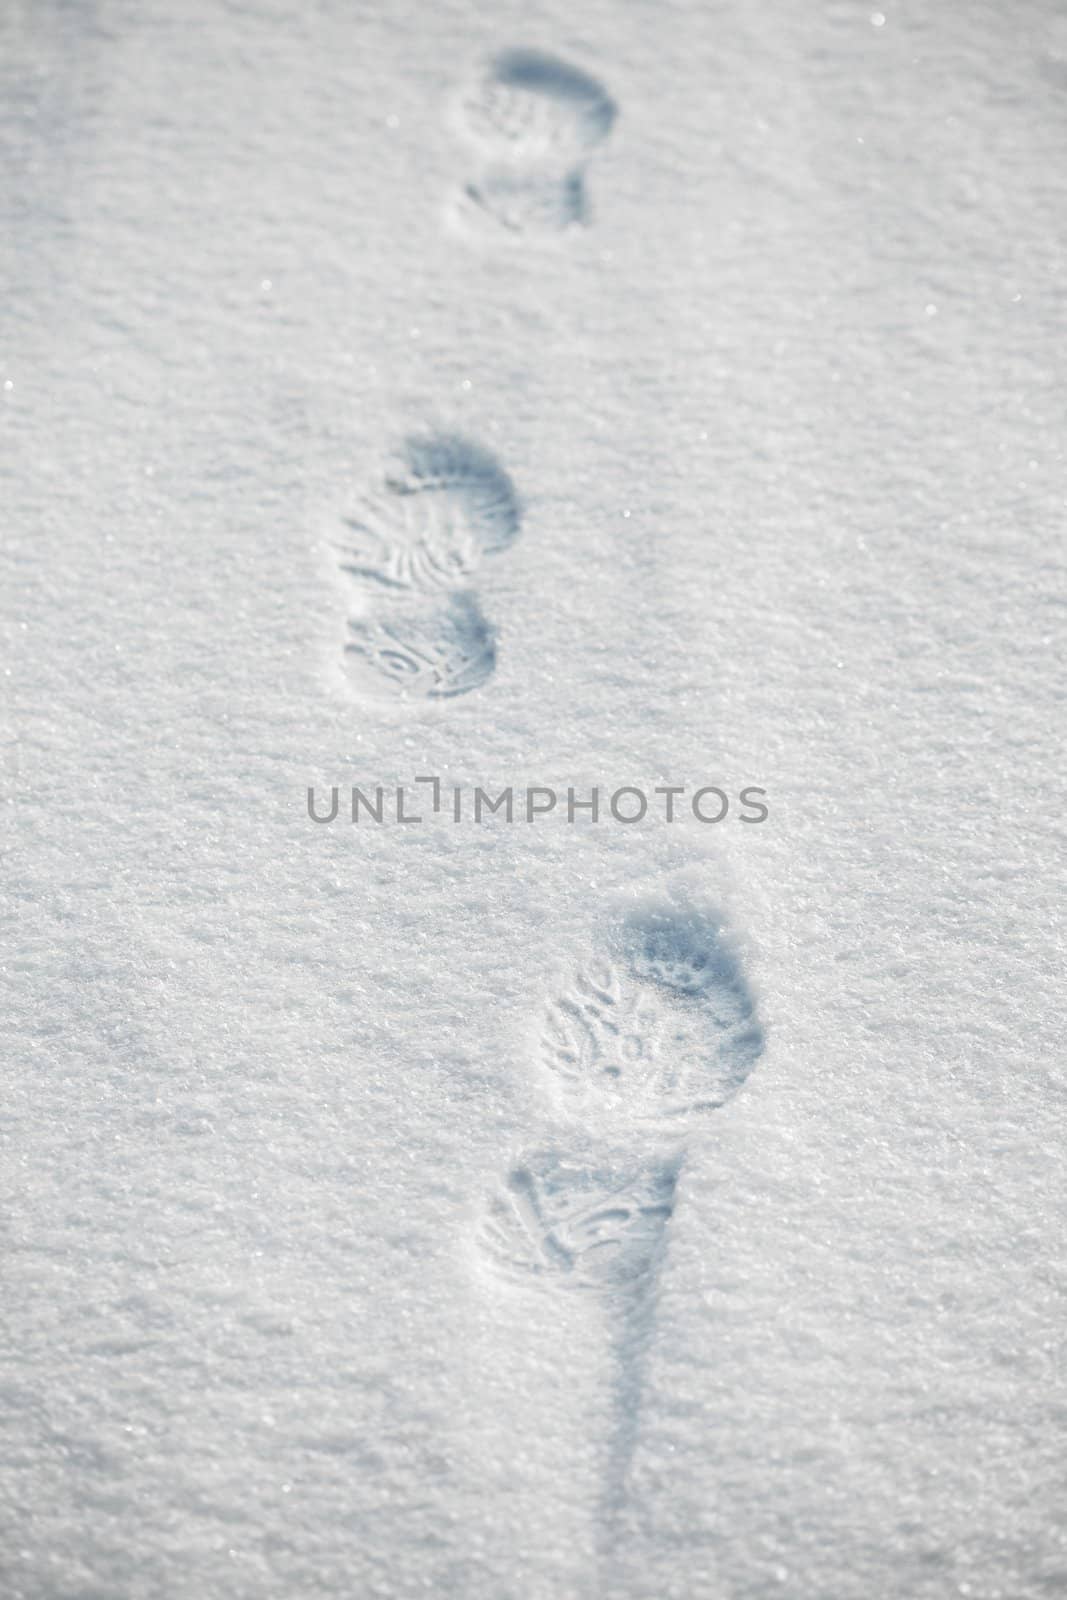 Footprints in the fresh snow